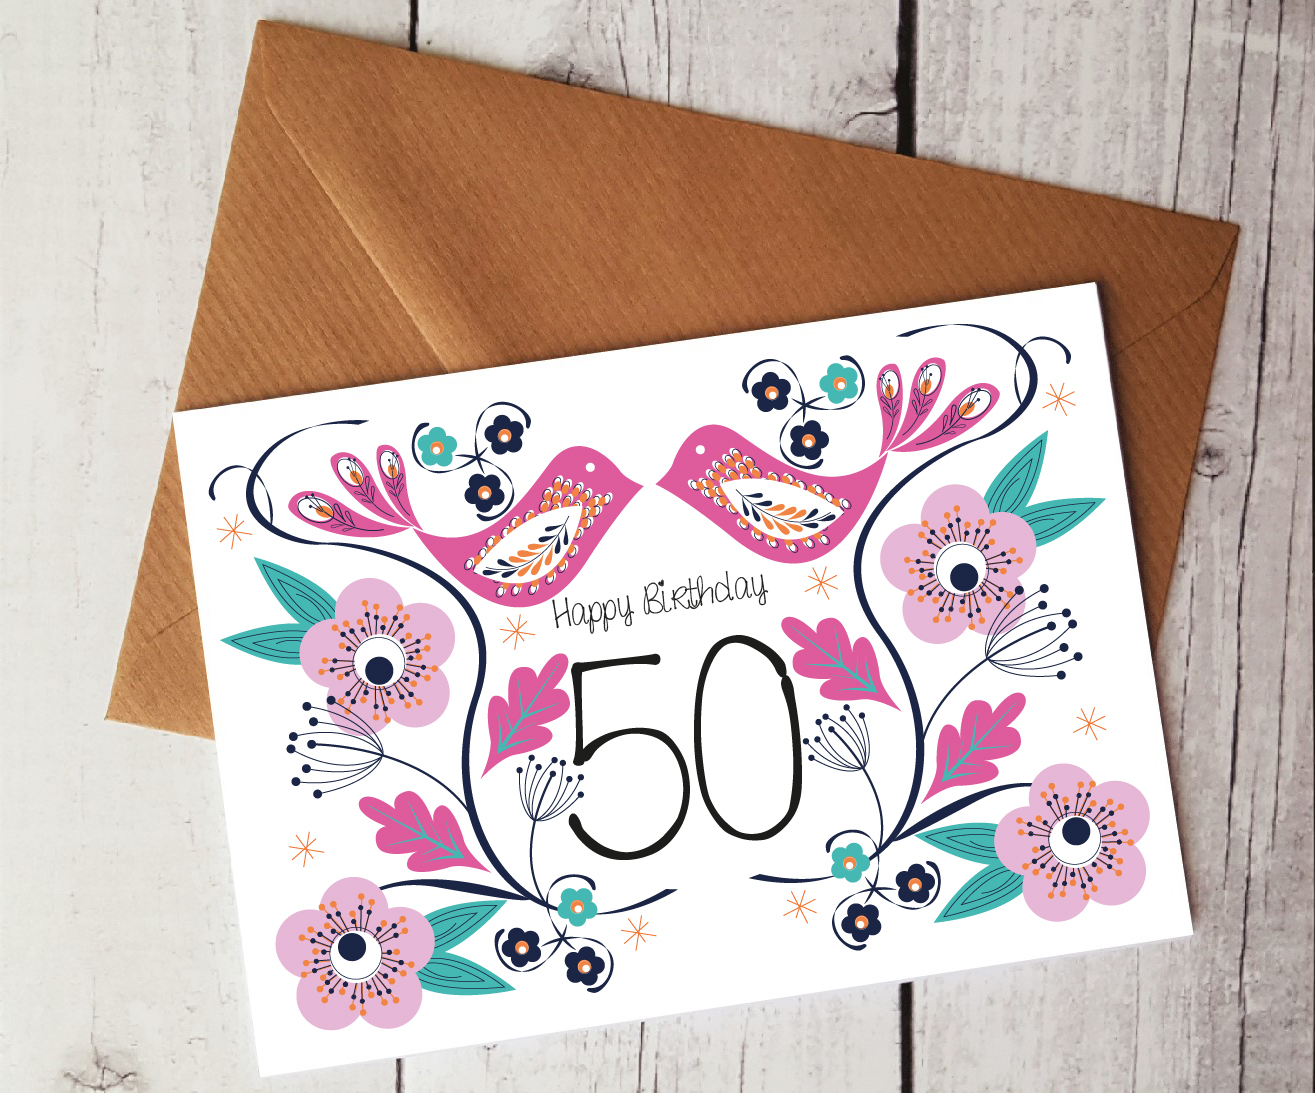 Ideas For 50Th Birthday Cards 50th Birthday Card